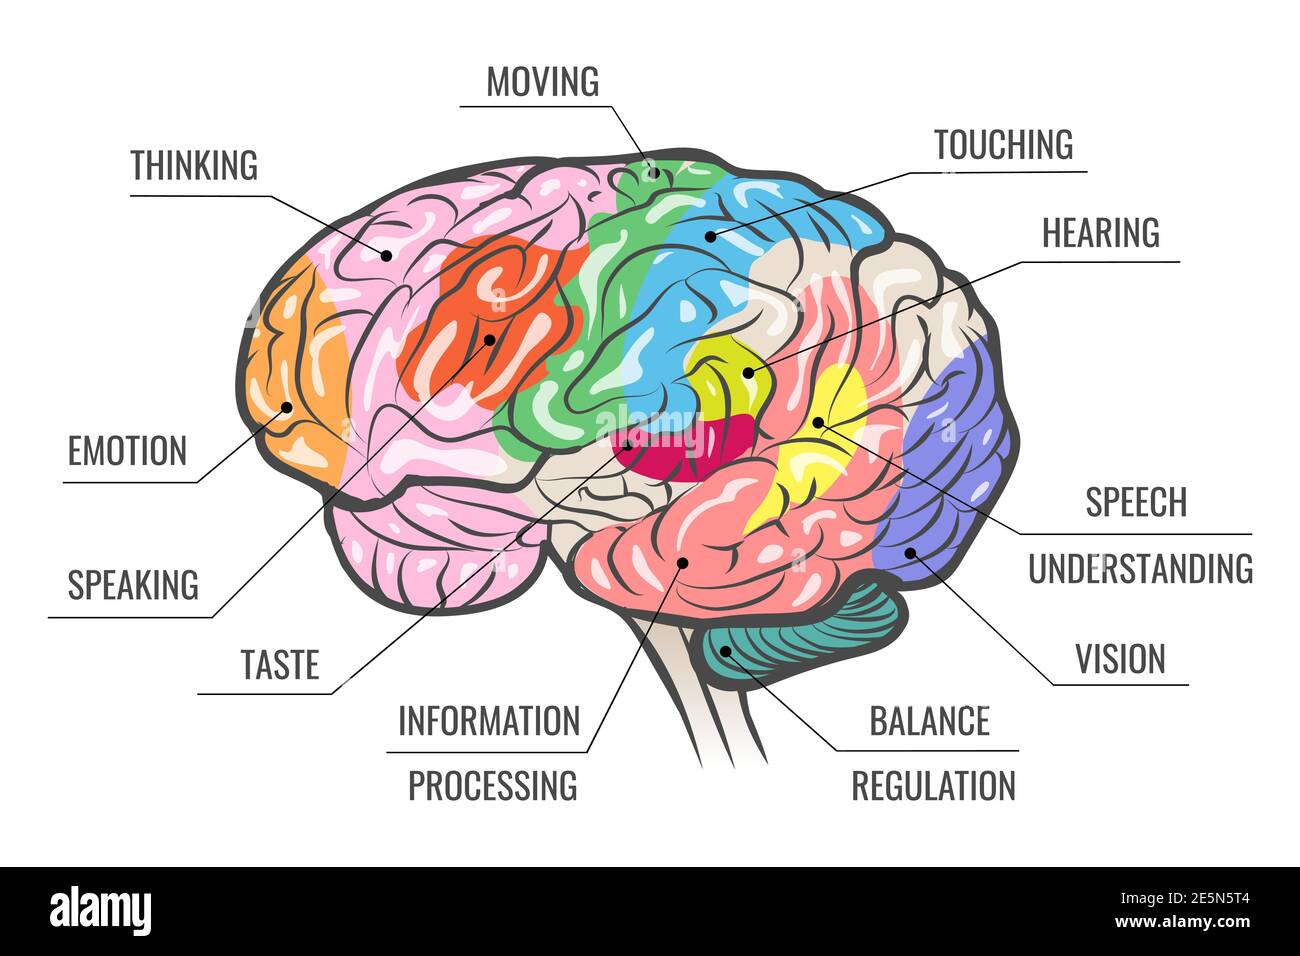 Arriba Imagen Mapa Mental Sobre El Cerebro Abzlocal Mx